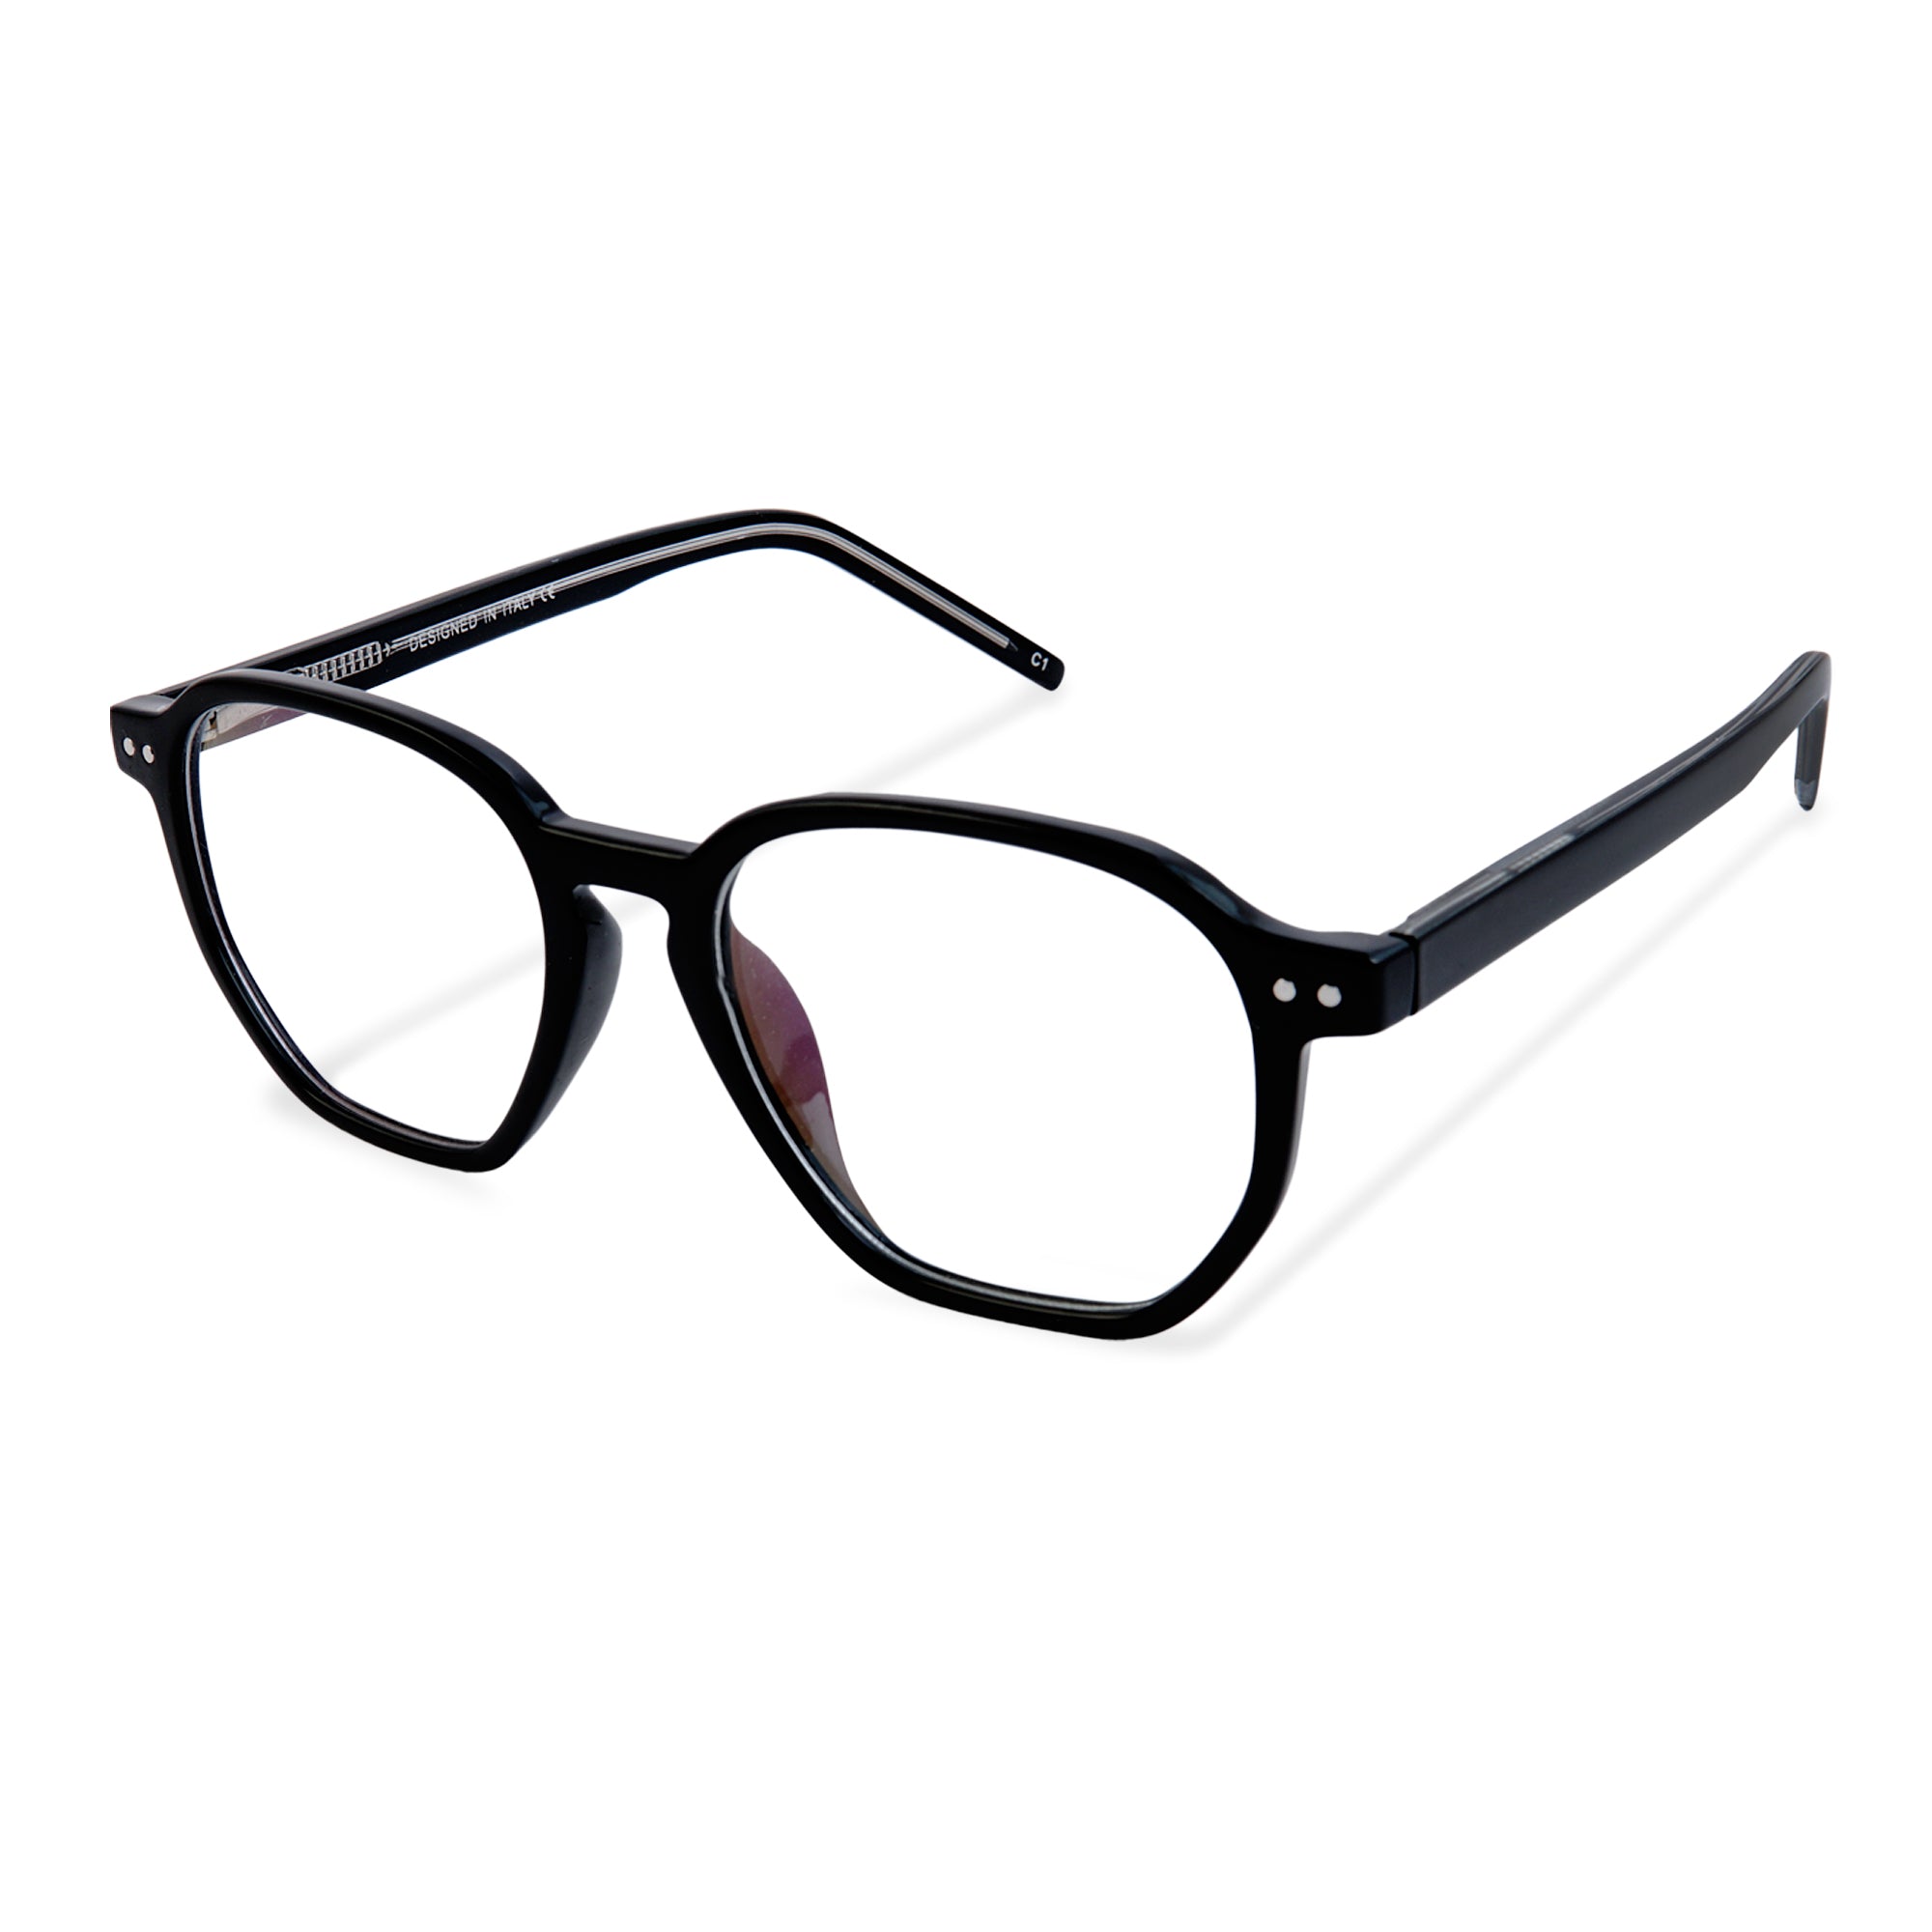 Black Cateye Rimmed Eyeglasses - L80167